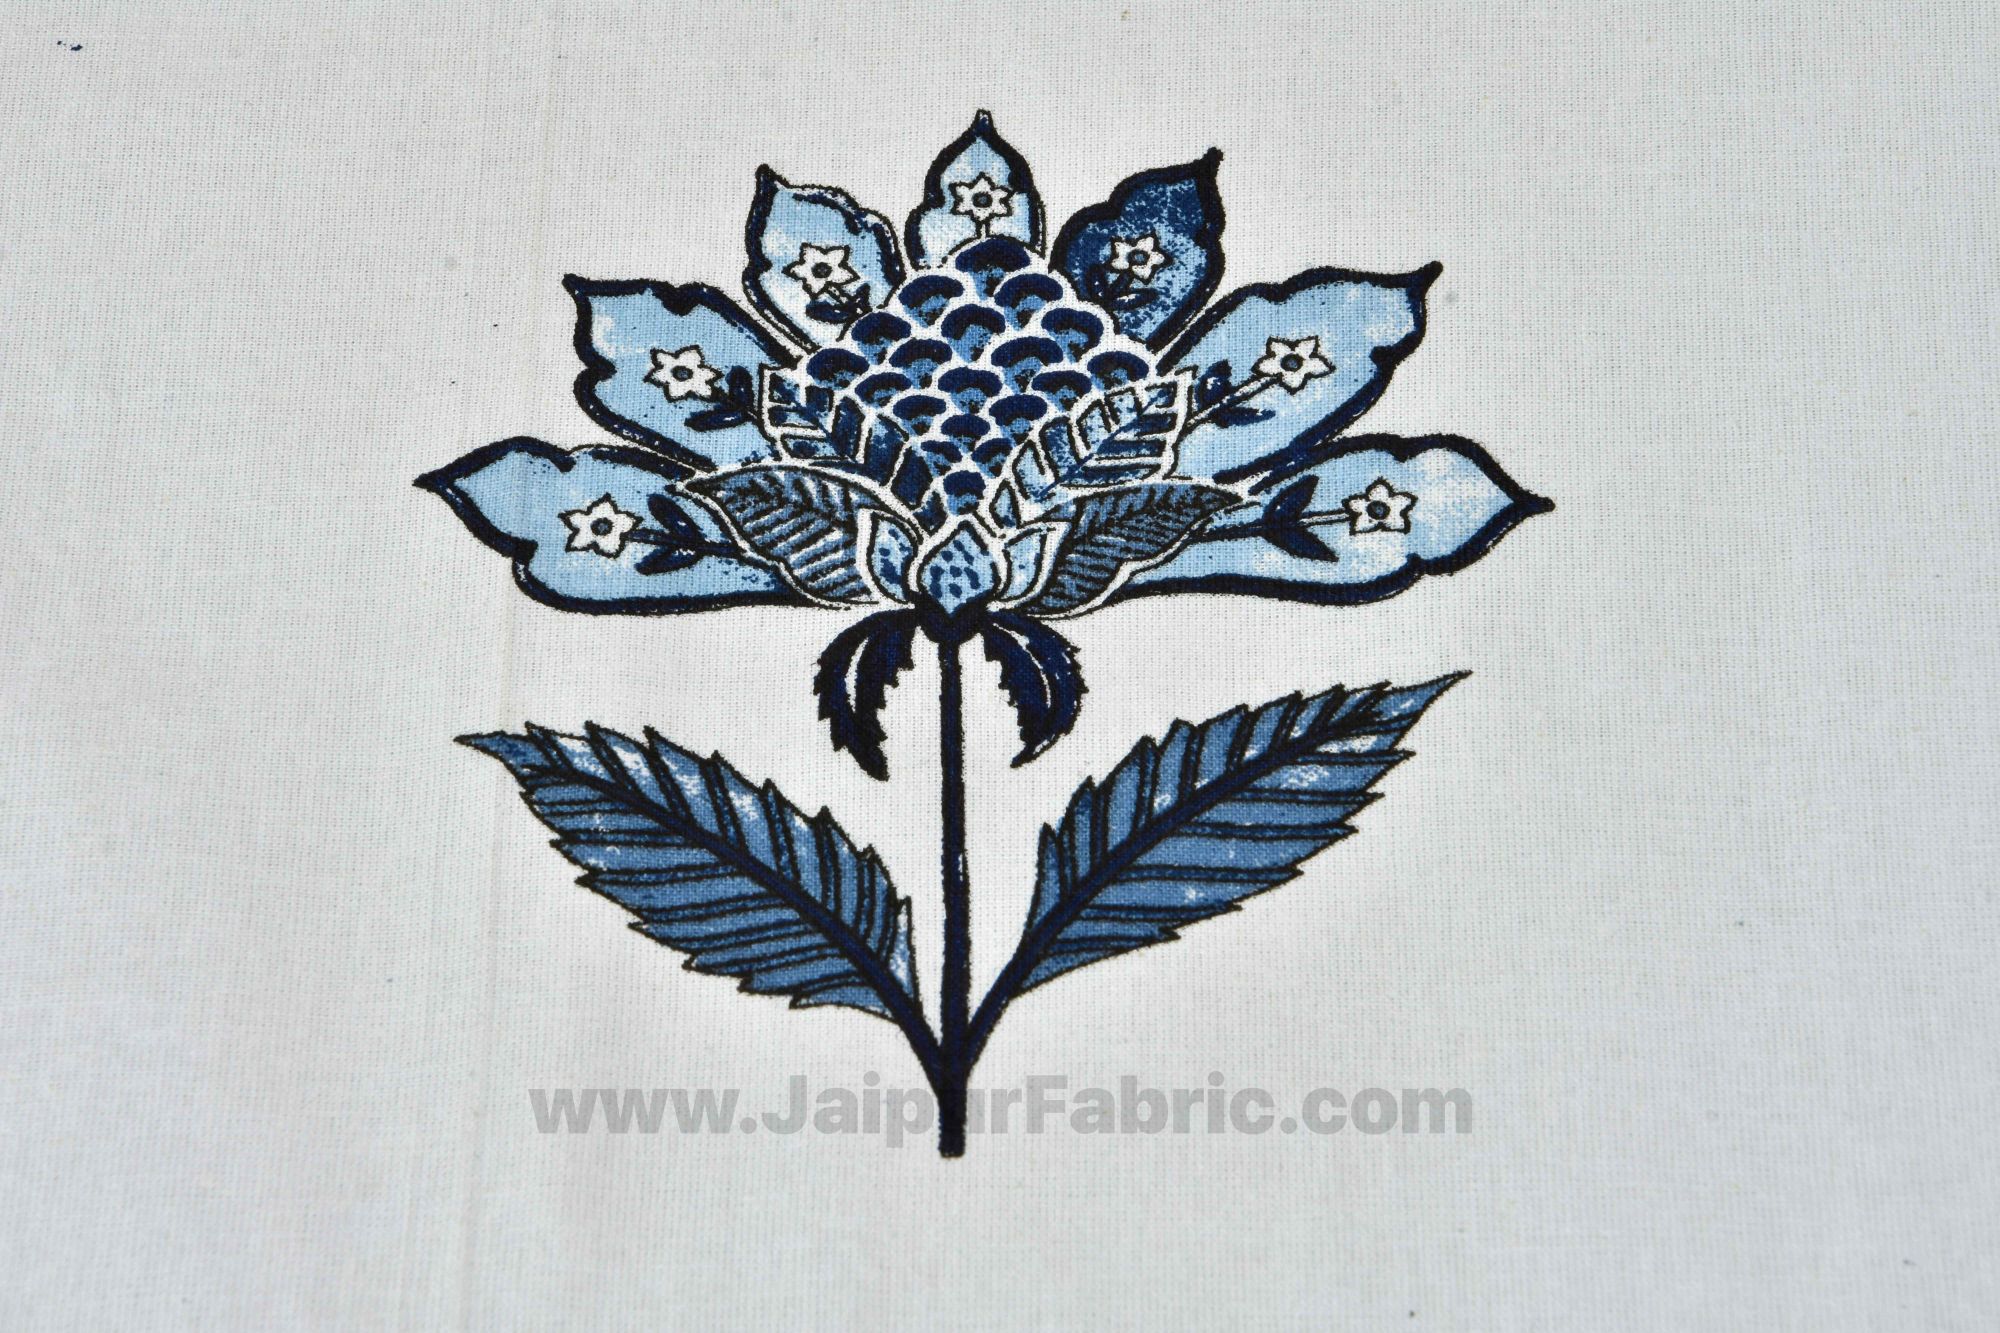 Lovely Lotus Blue Bunch Cotton King Size BedSheet